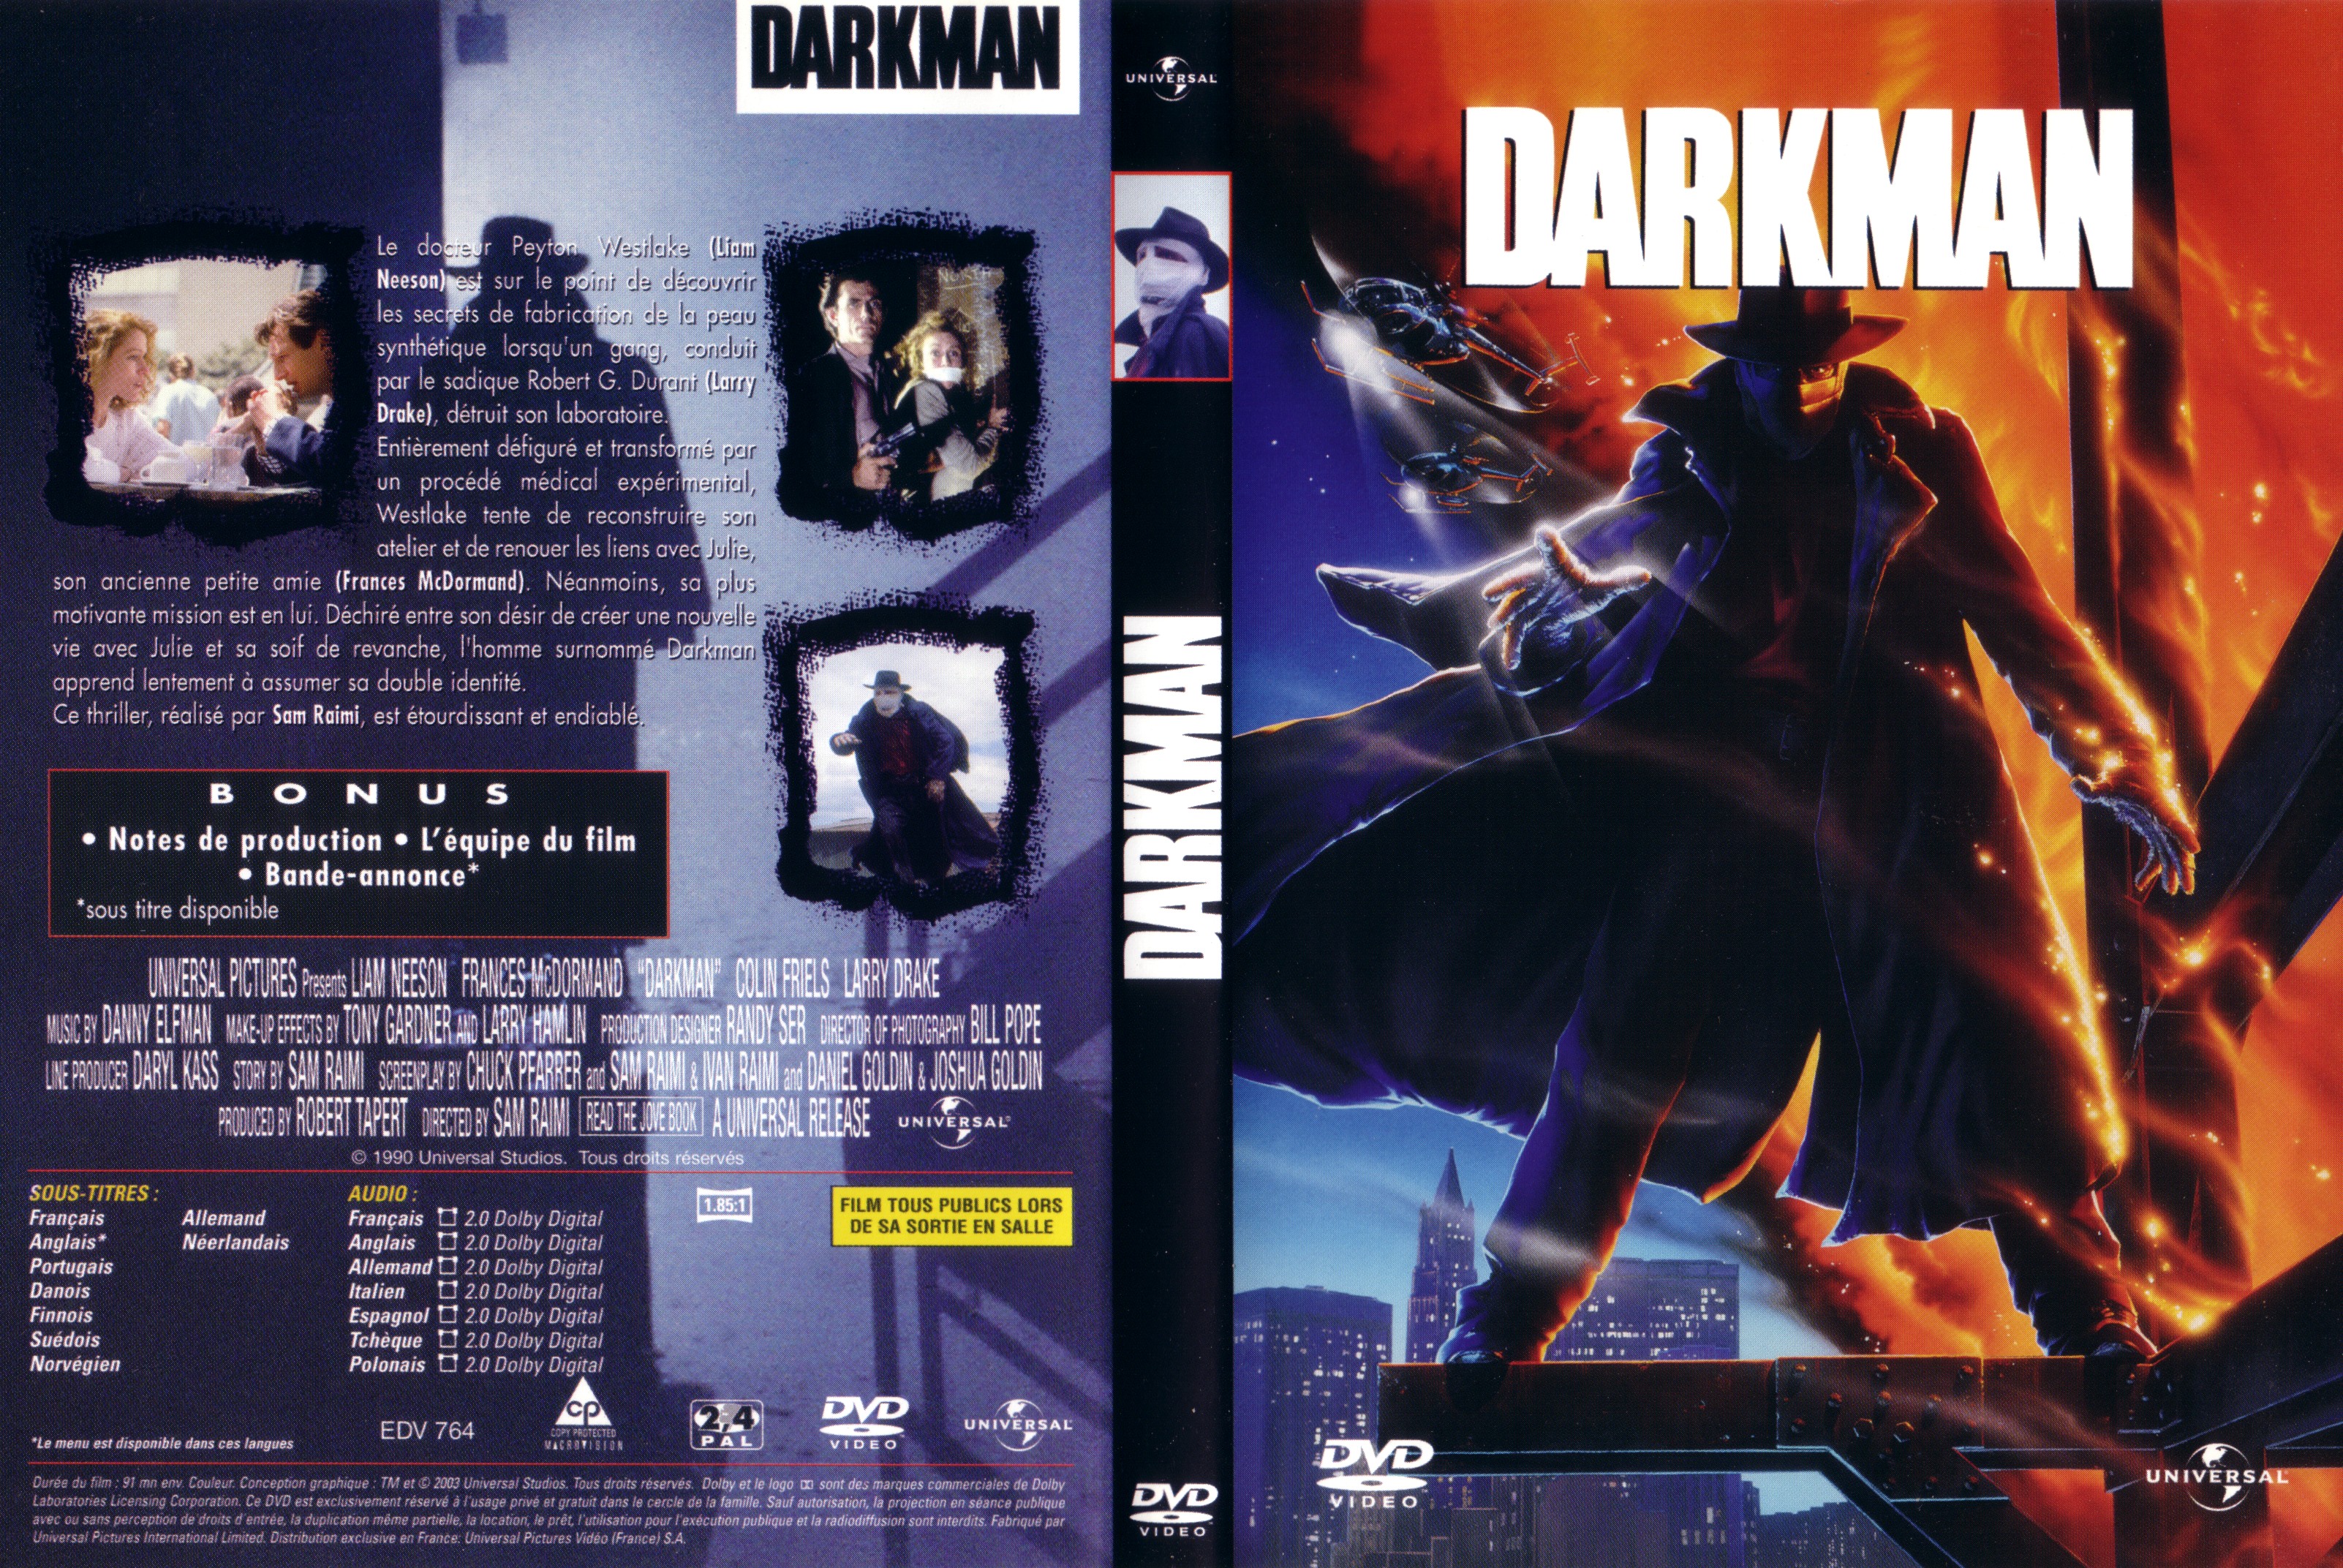 Jaquette DVD Darkman v2